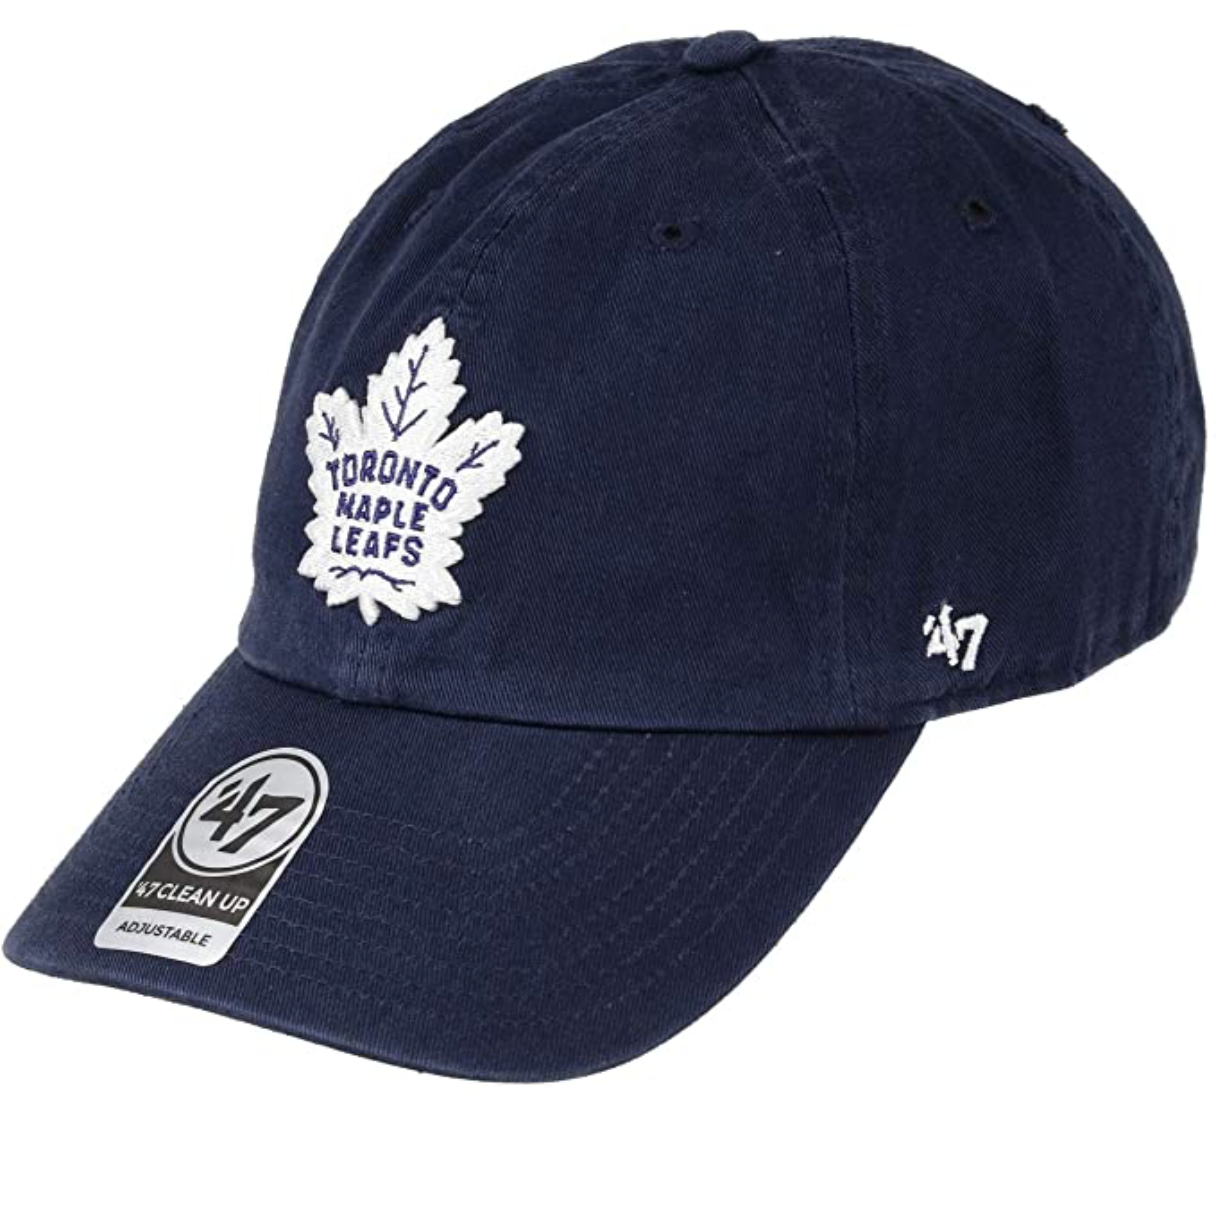 '47 Brand - Toronto Maple Leafs Clean Up Cap - Navy